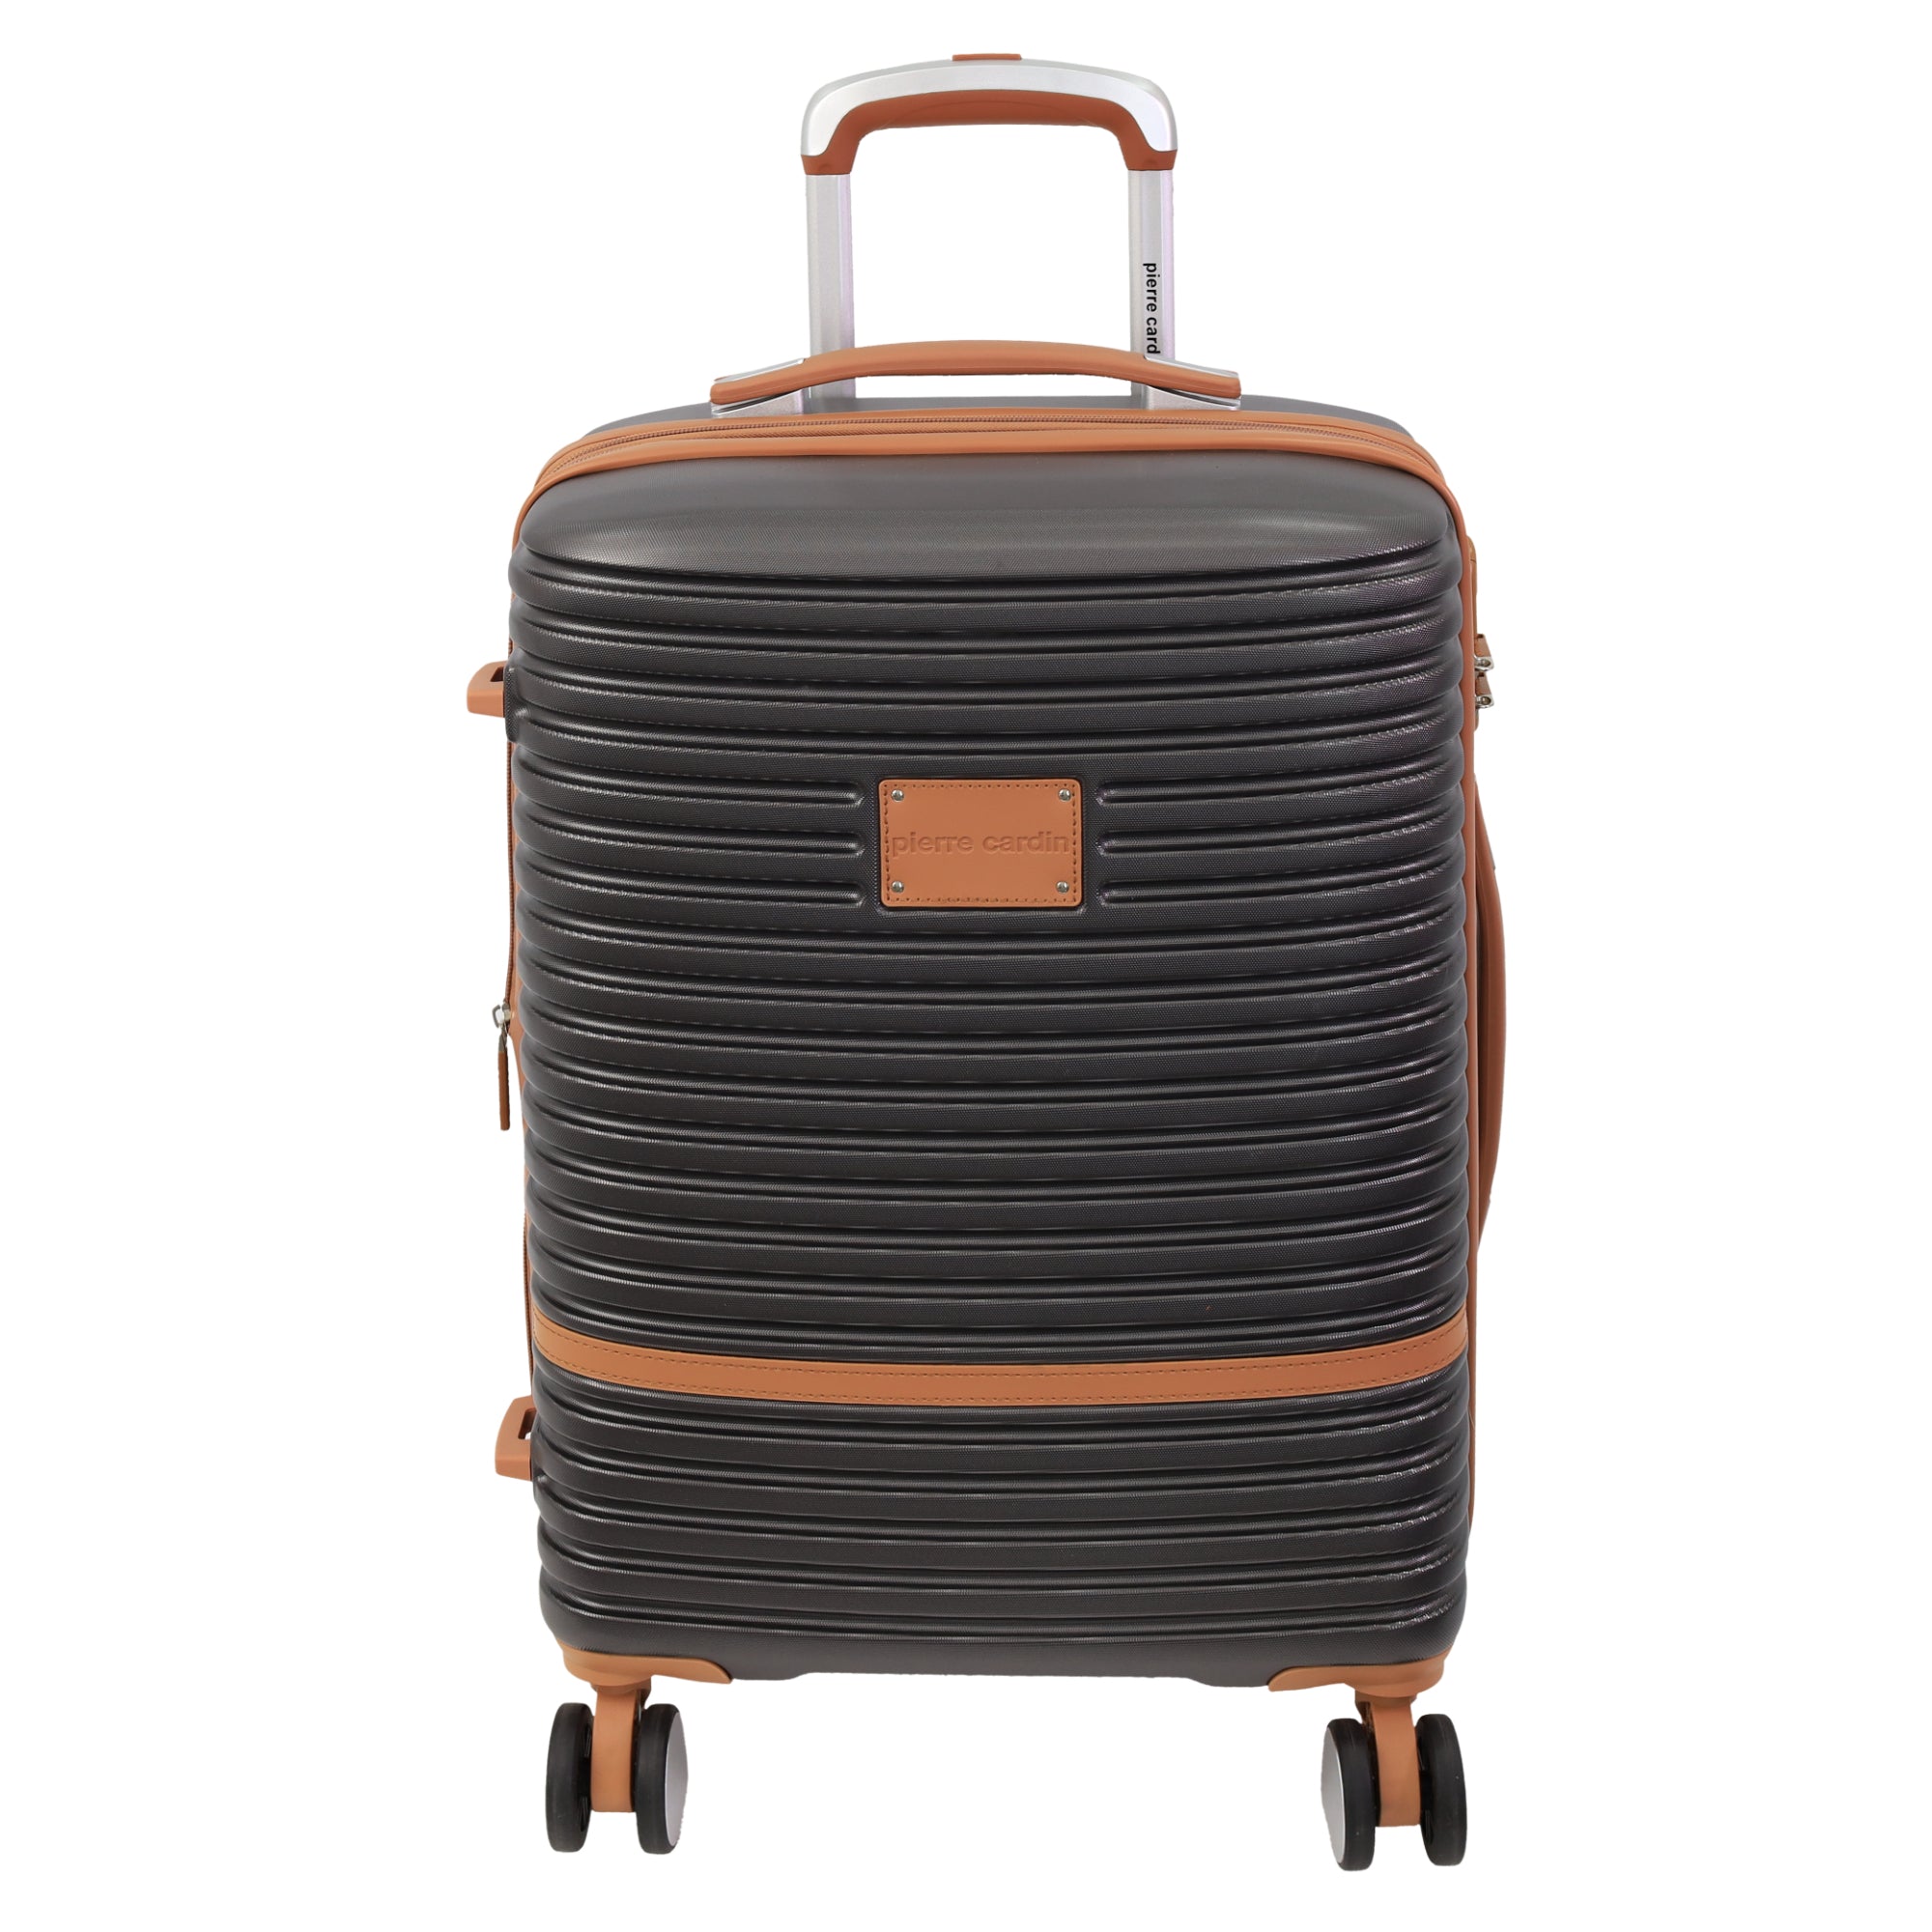 Pierre Cardin 54cm CABIN Hard Shell Suitcase in White